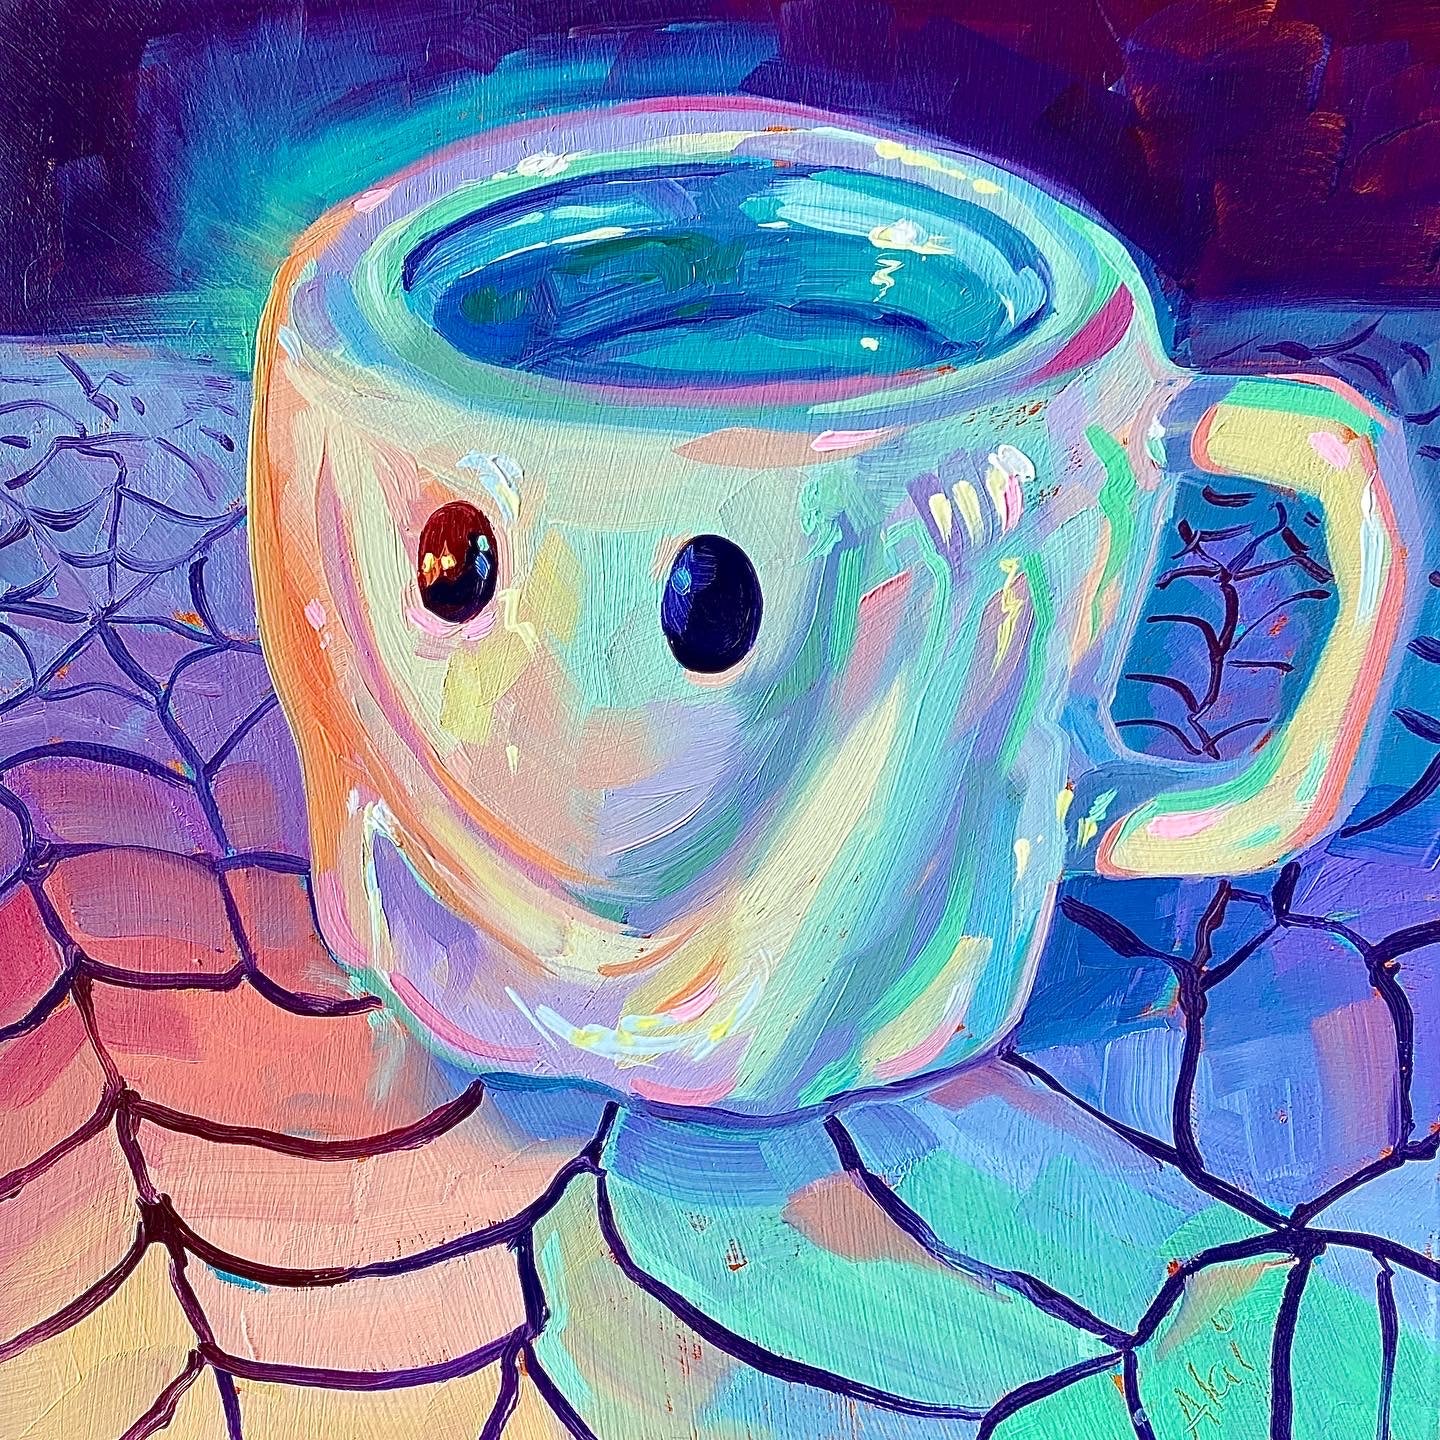 Ghost mug - Original Oil Painting